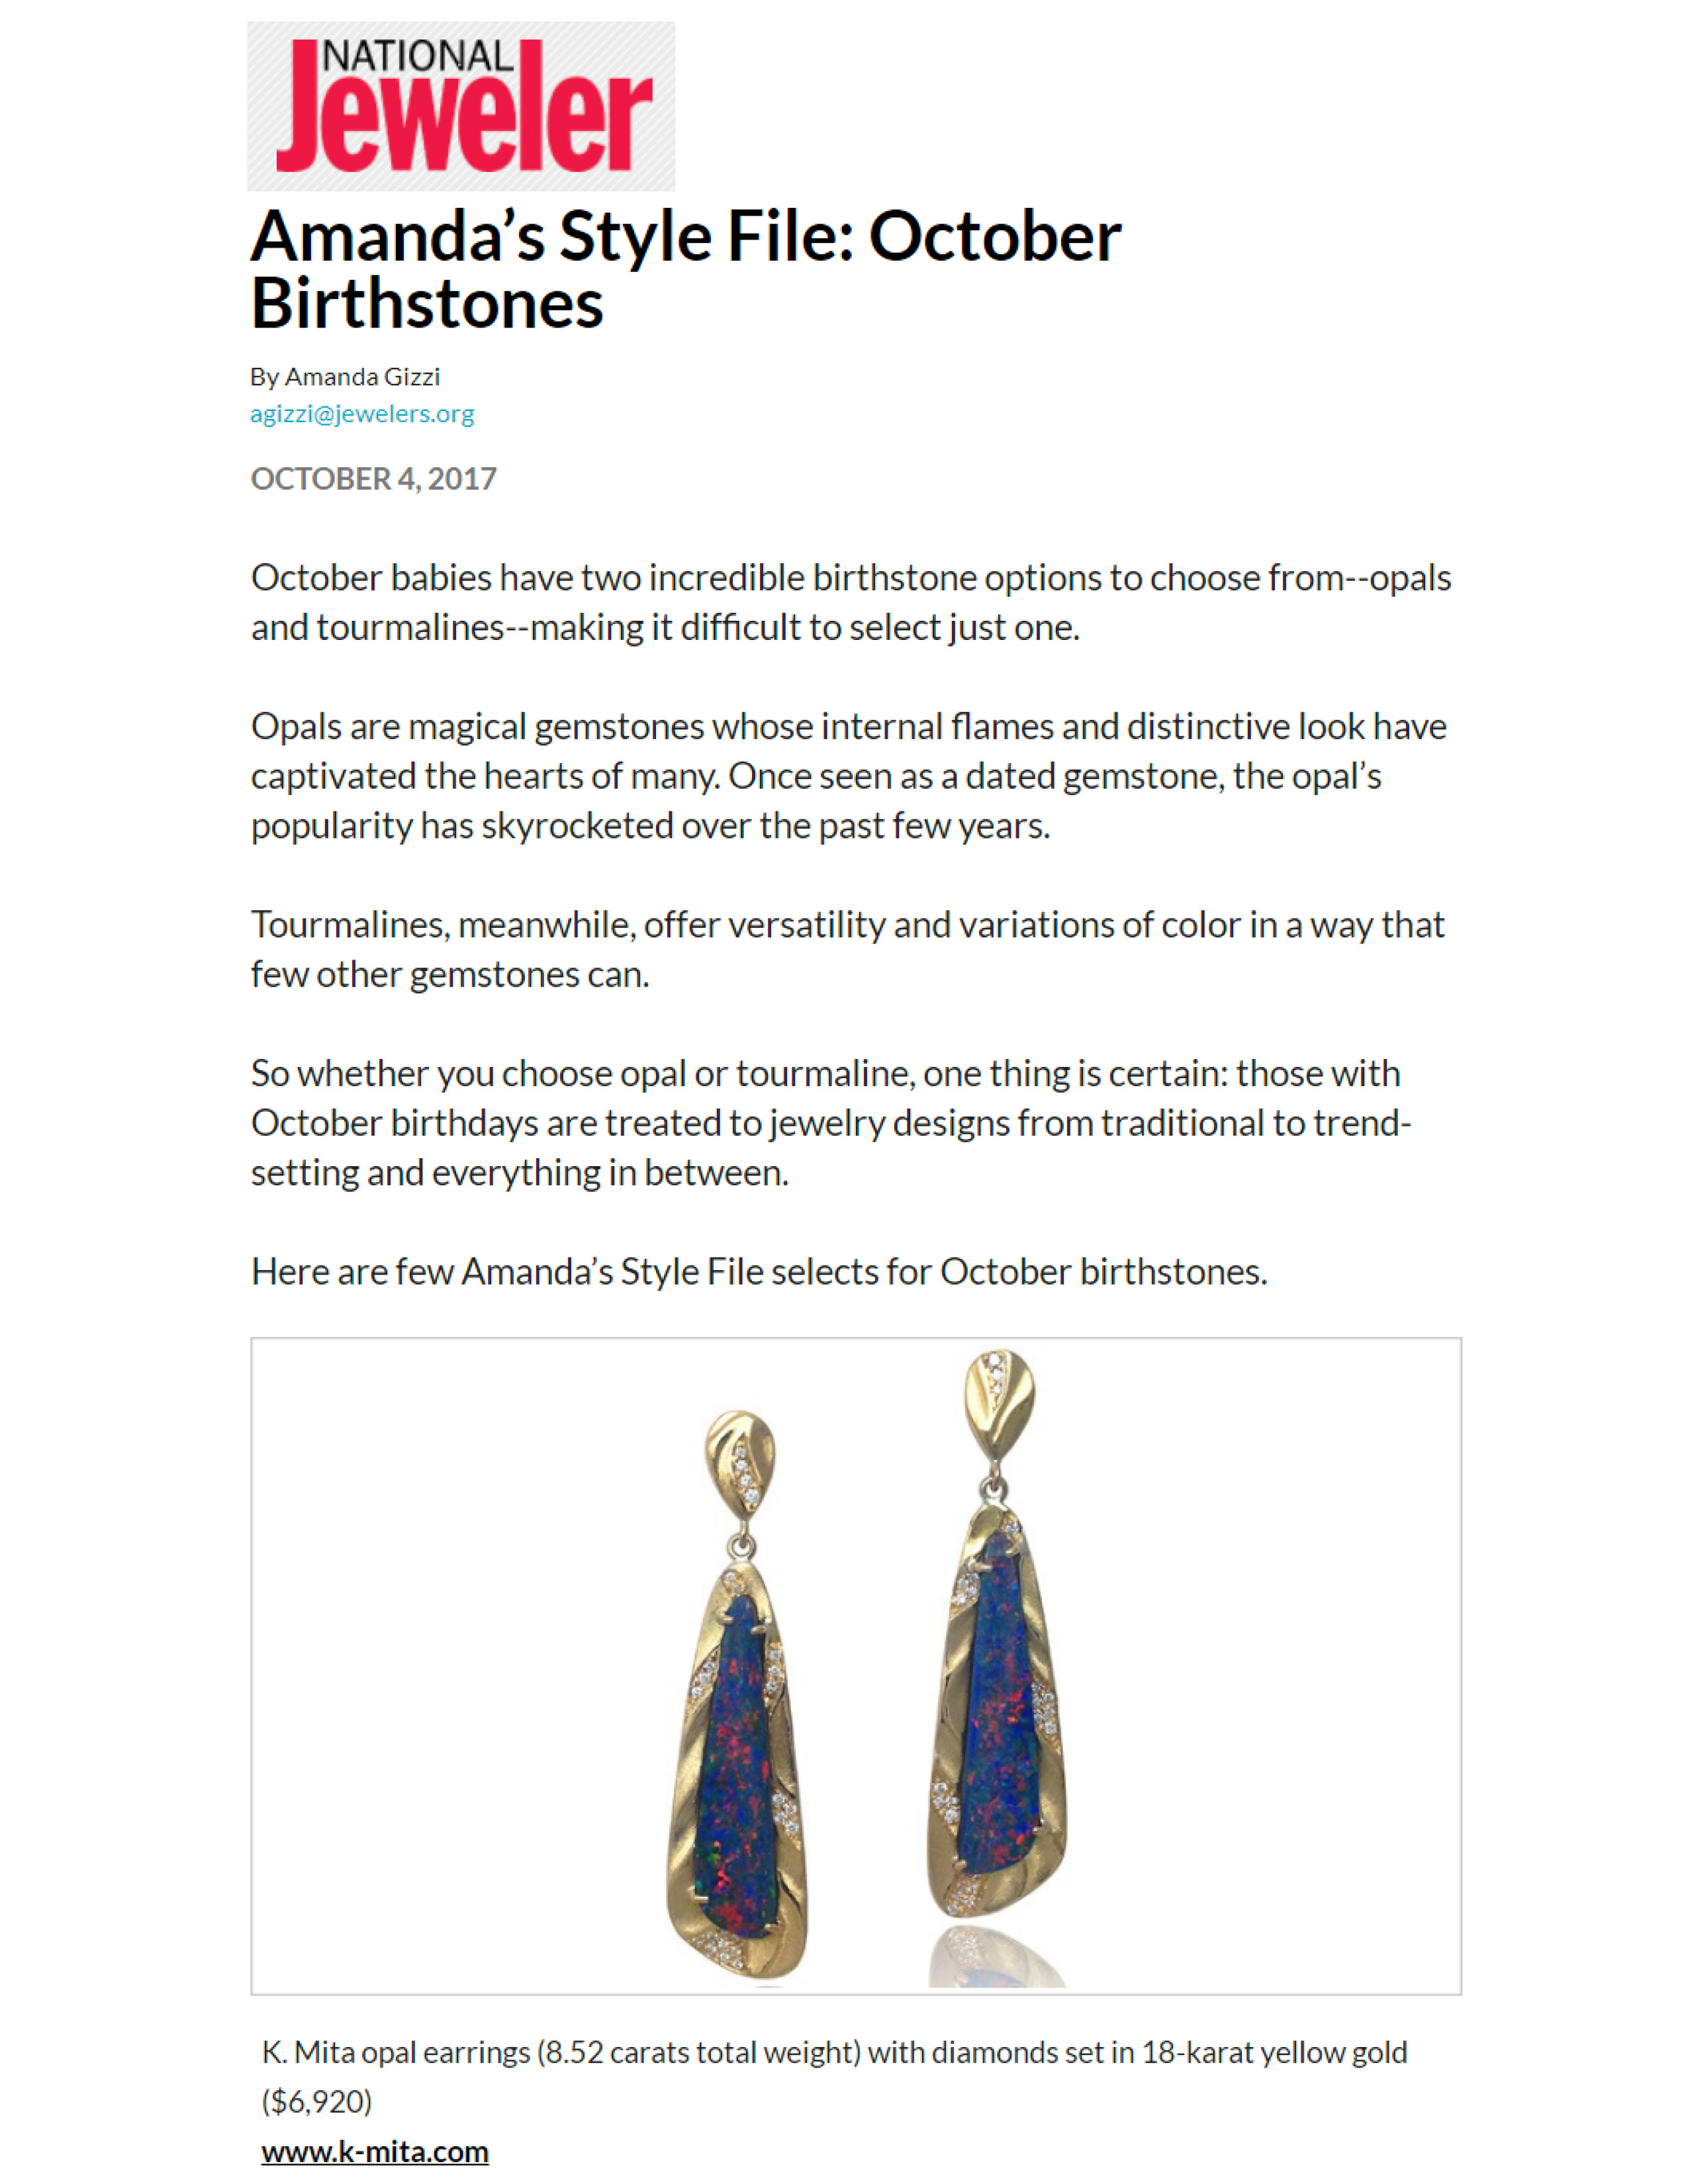 Long Opal Earrings by K.Mita | Opal Diamonds 18k Yellow Gold | nationaljeweler.com October 2017